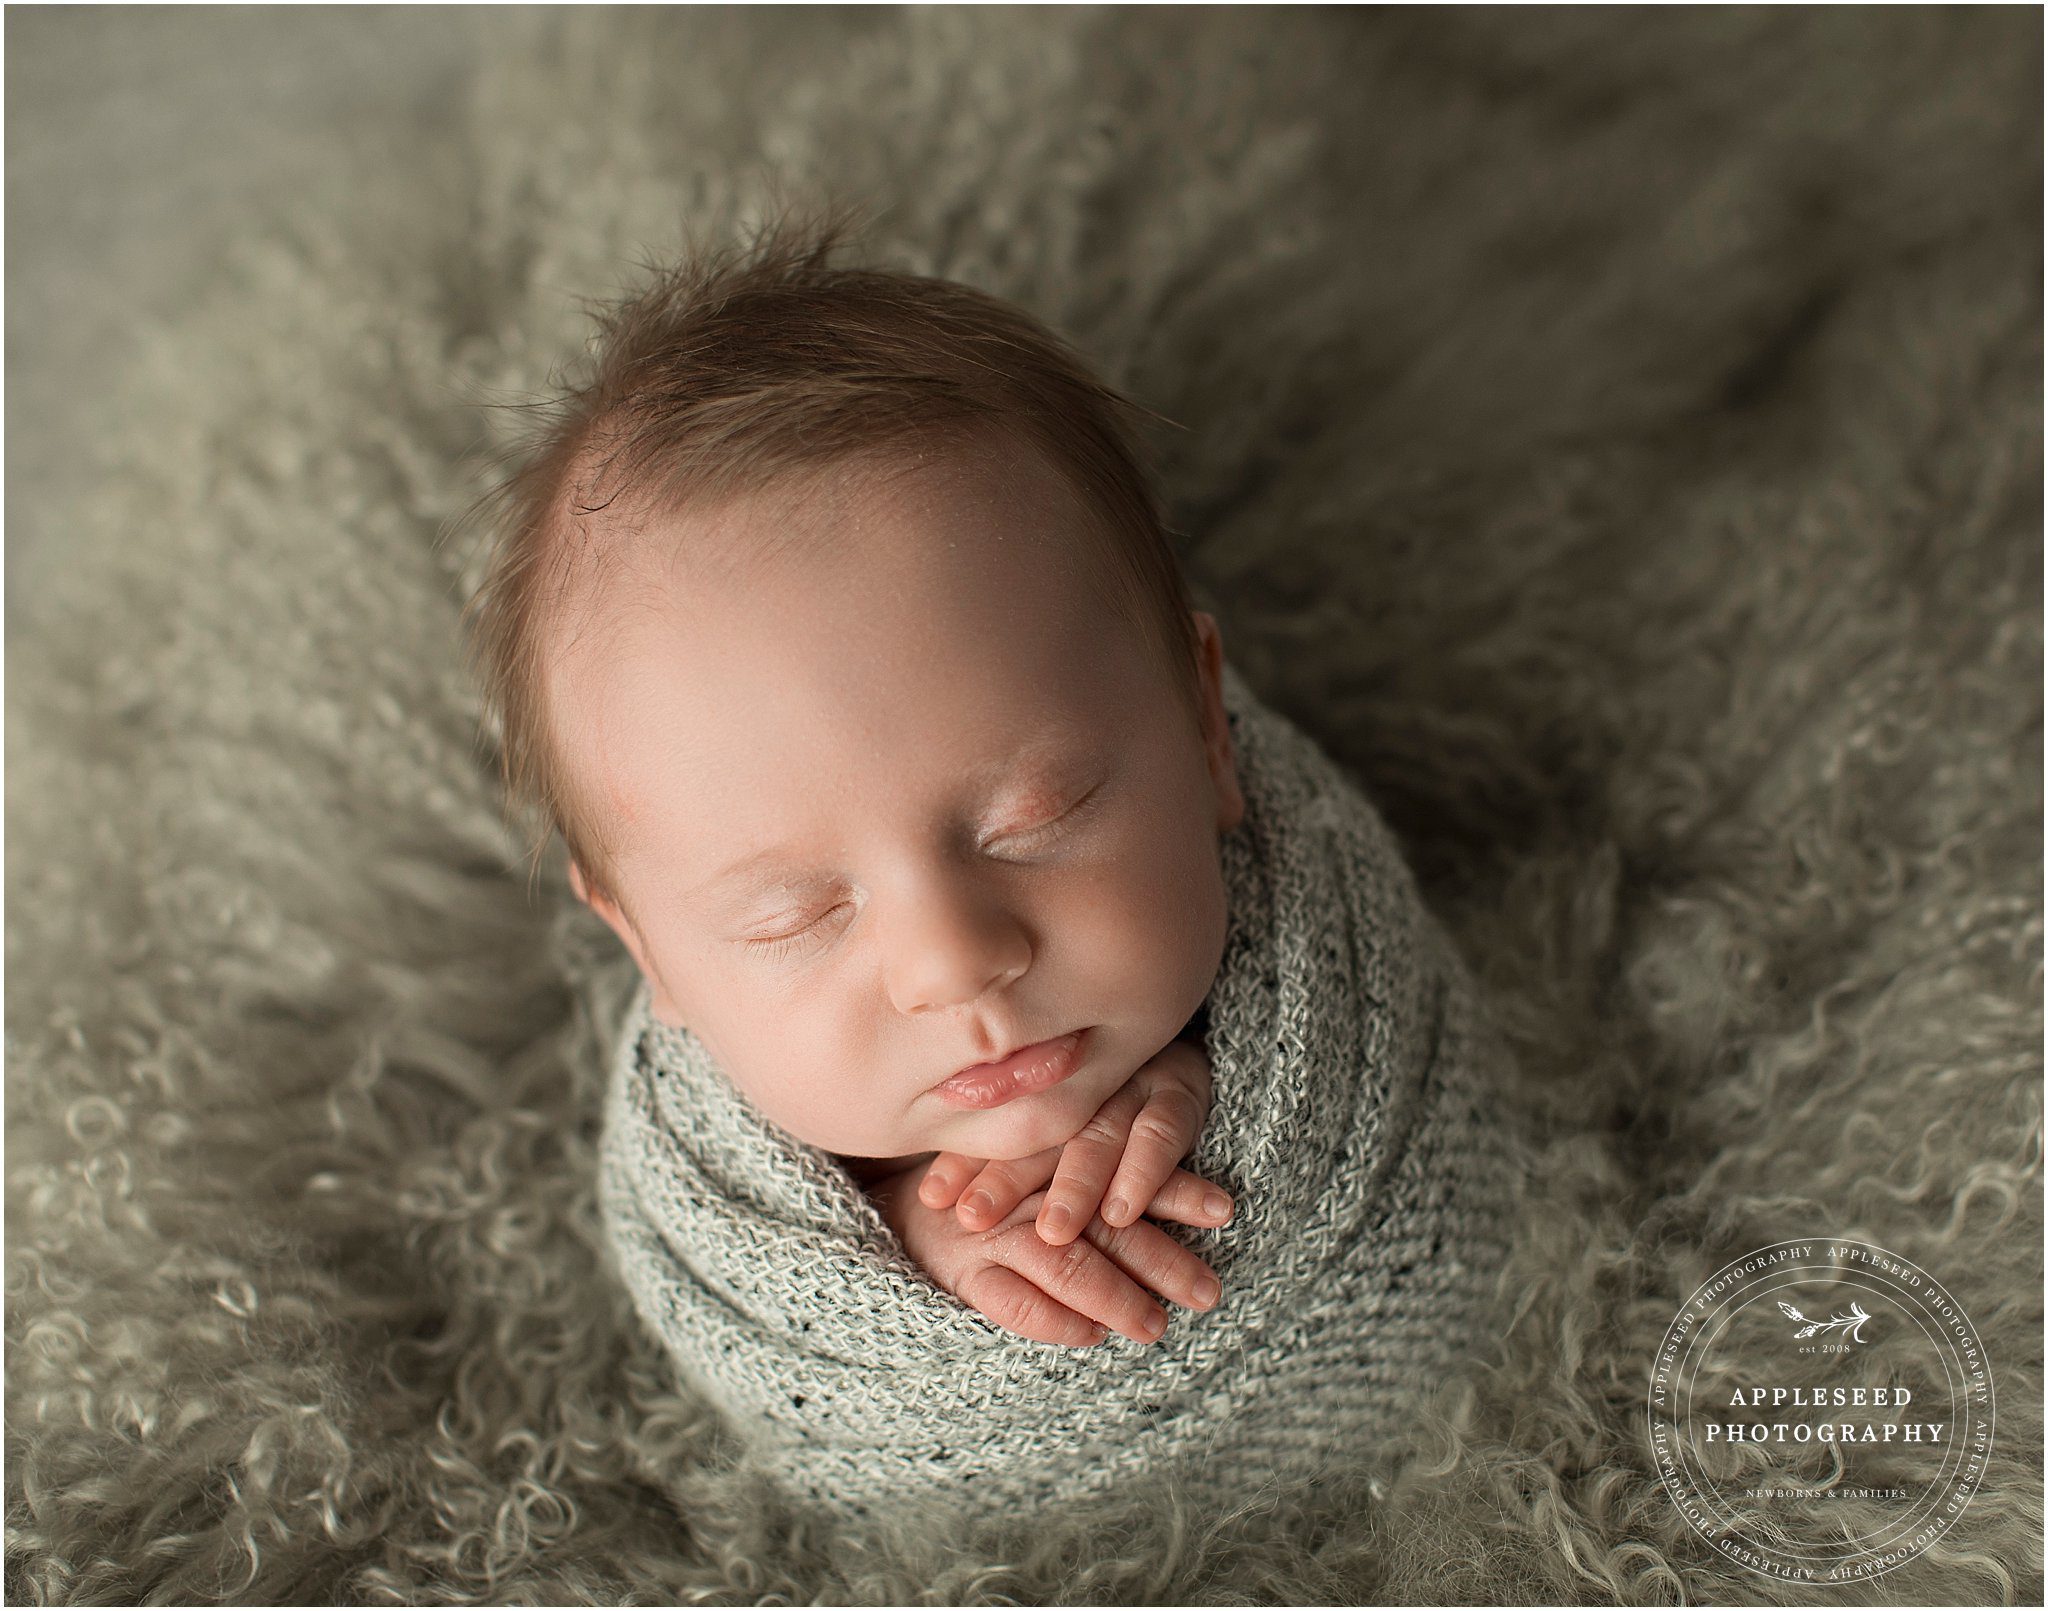 Felix | Atlanta Newborn Photographer | Appleseed Photography